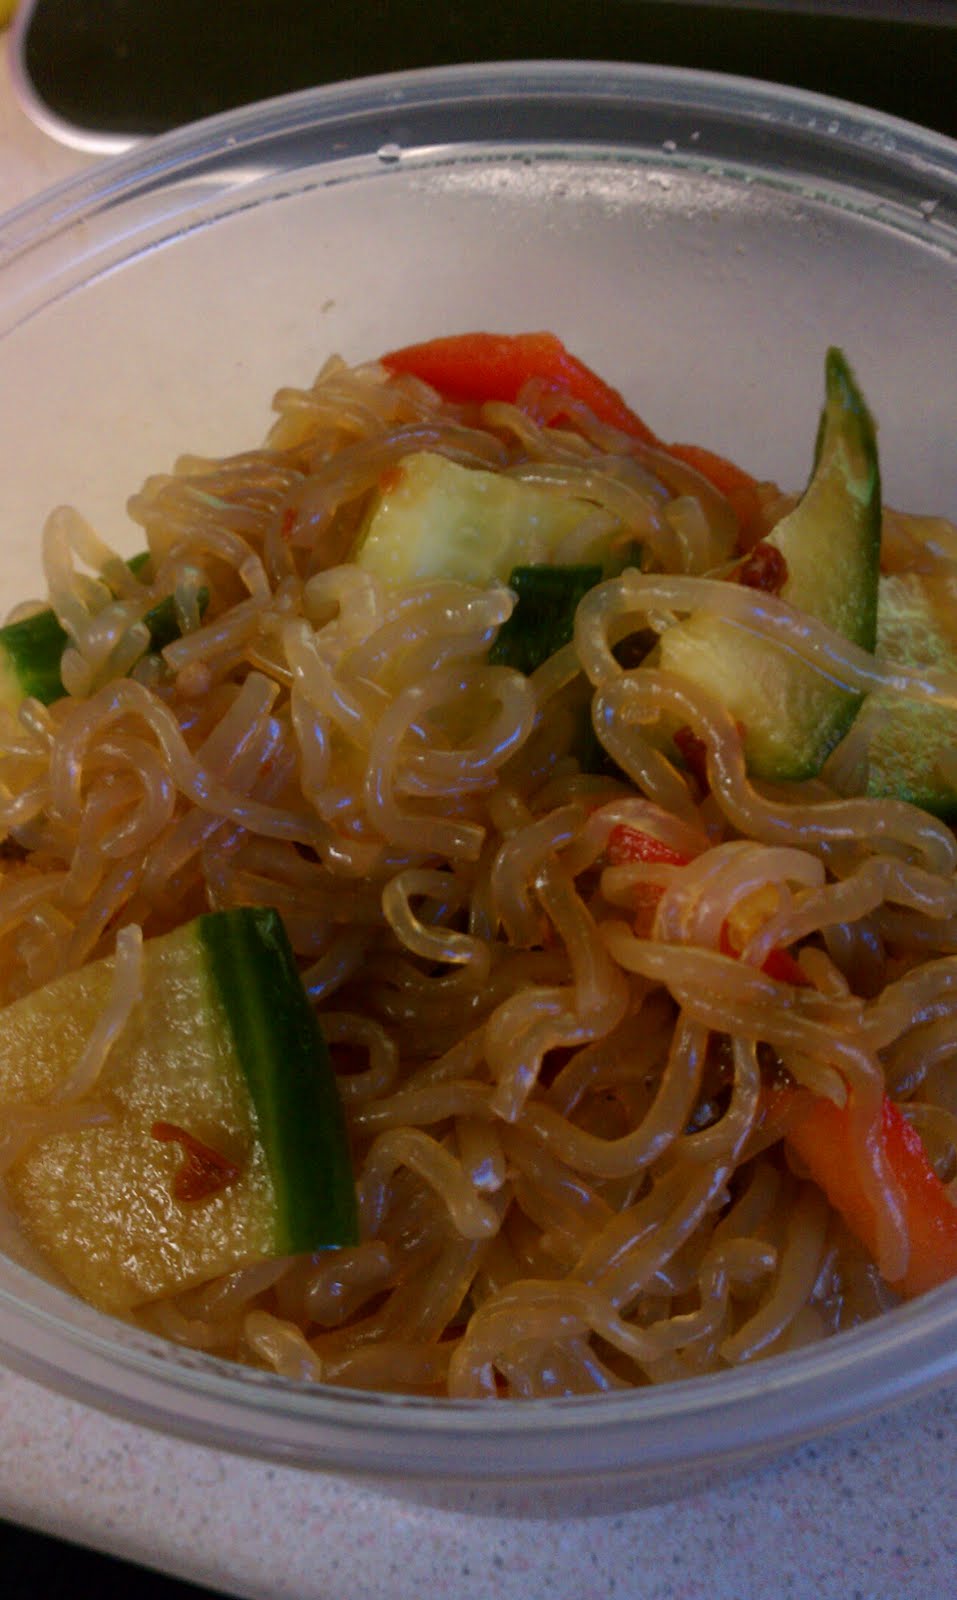 Low Carbin' Made Simple: Oriental Cold Noodle Salad